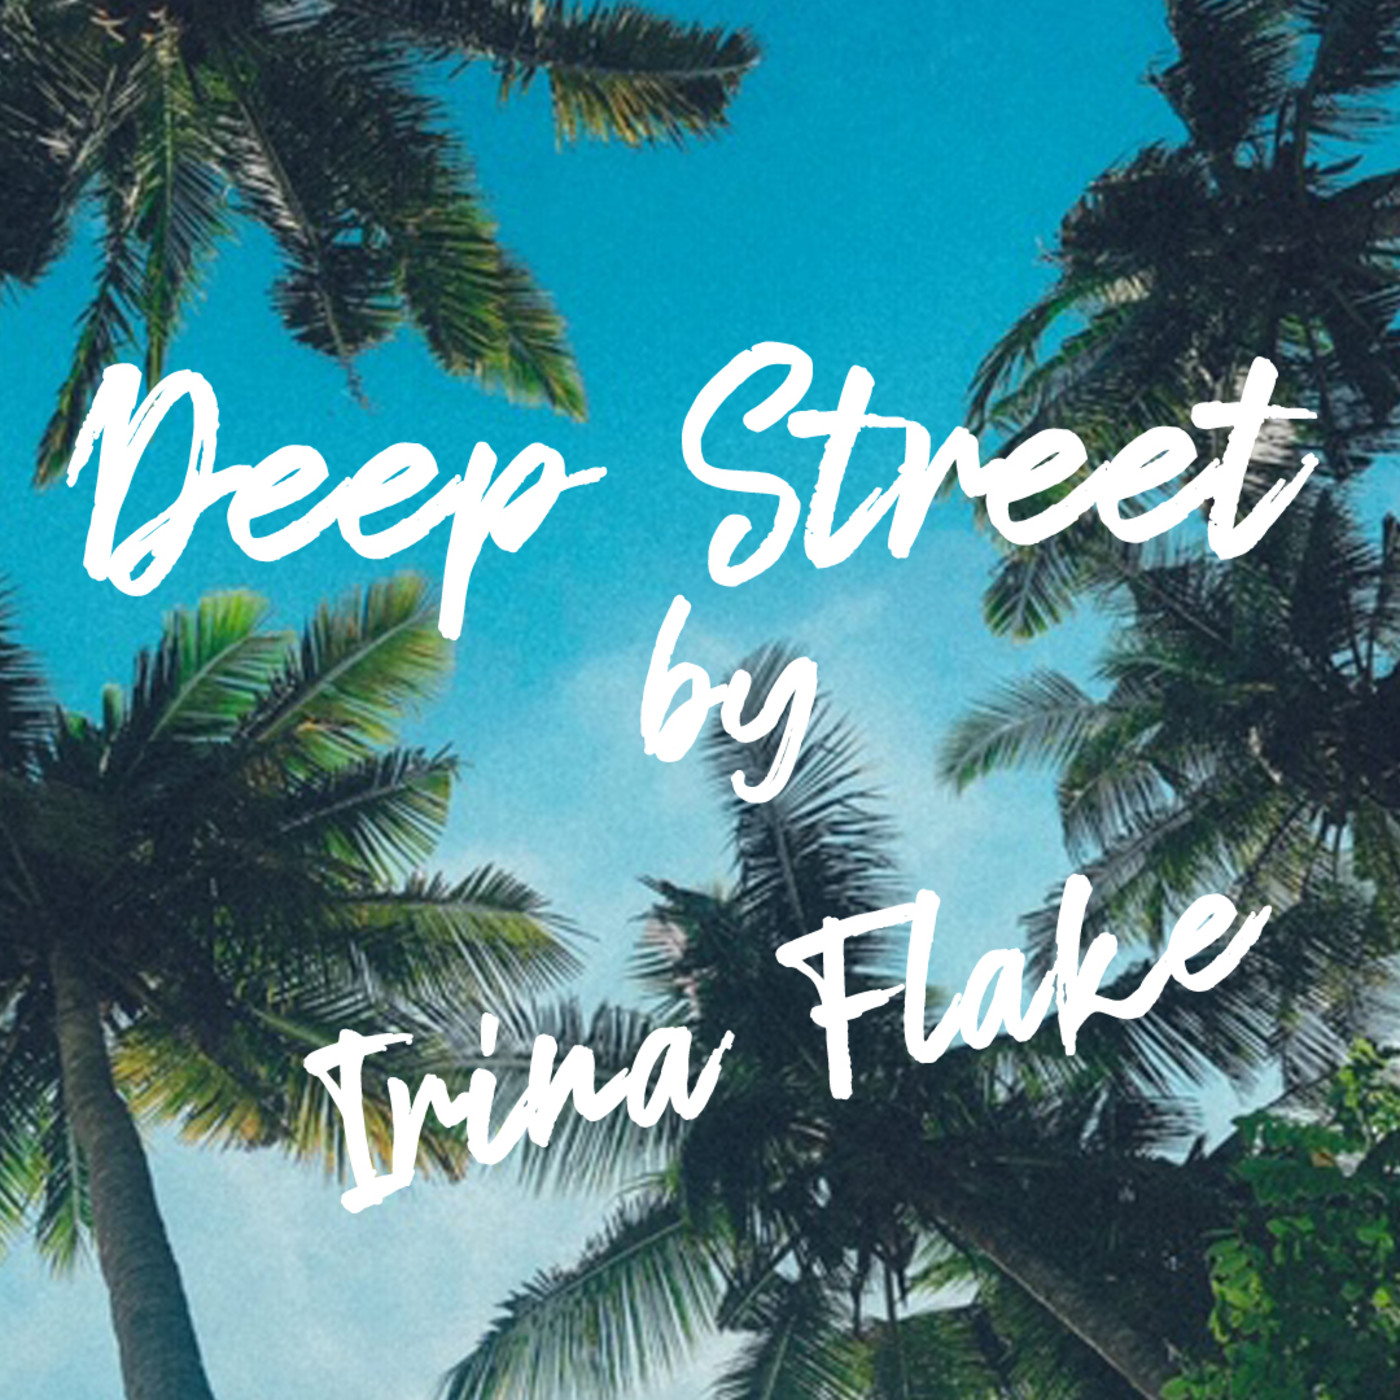 Deep Street by Irina Flake 13 @ Flaix FM 30.06.19